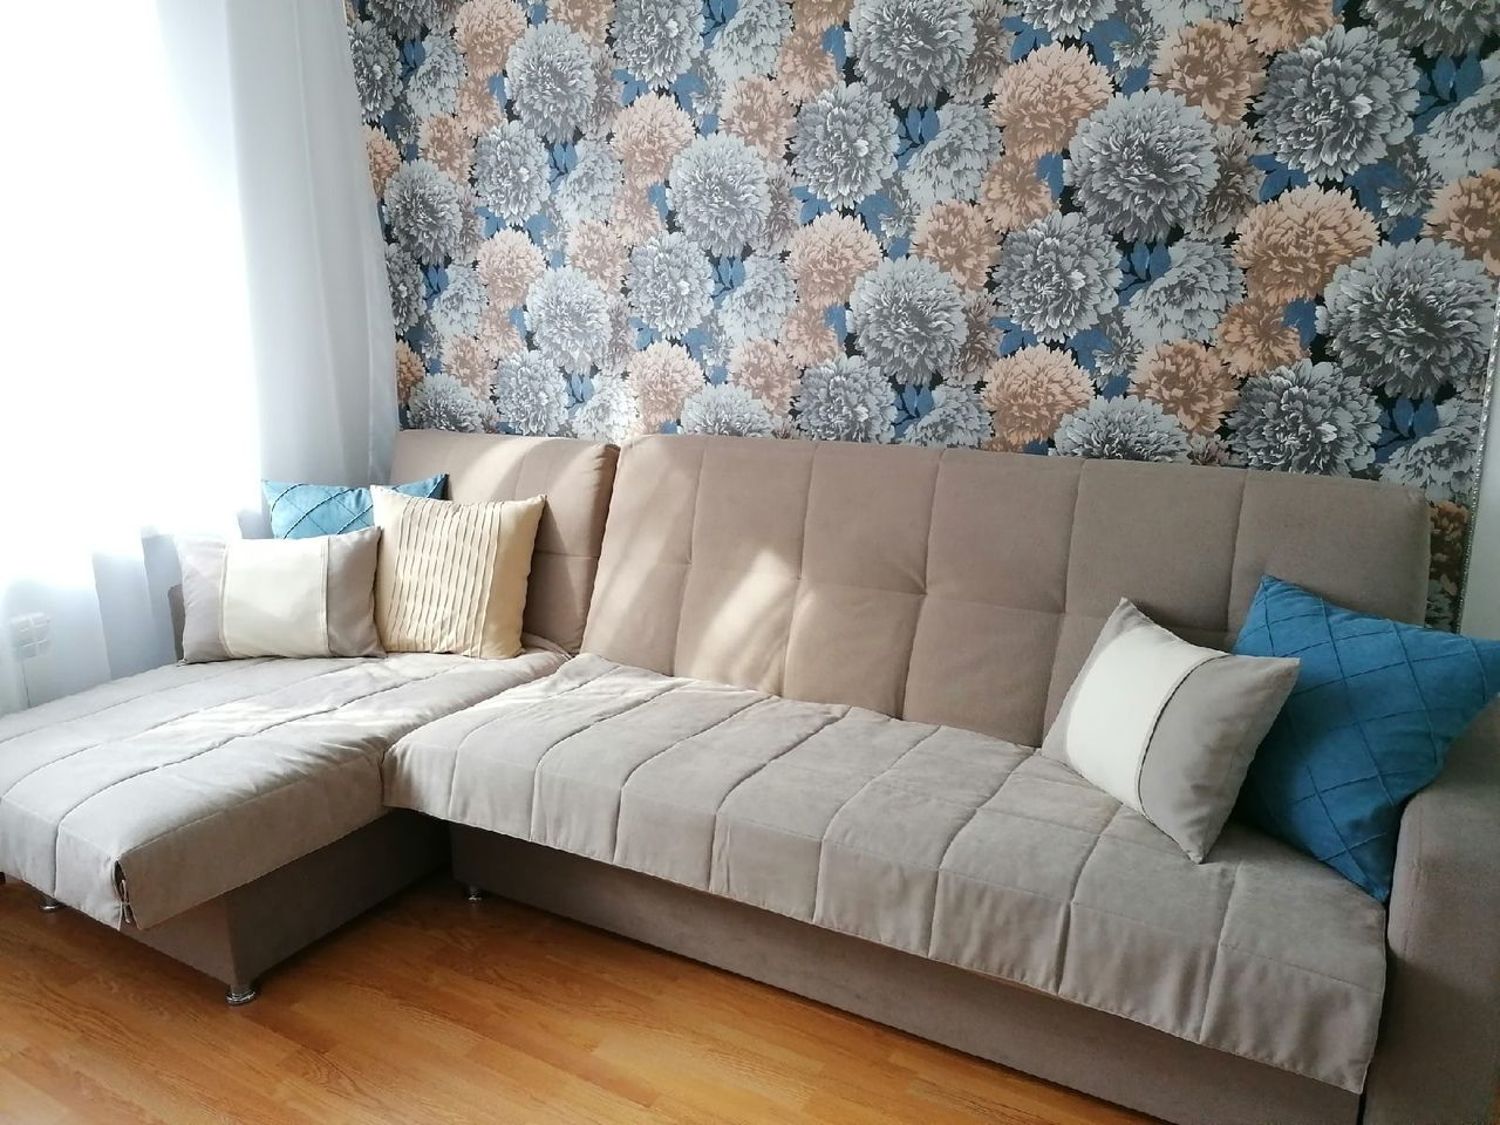 Photo №1 к отзыву покупателя Tatyana о товаре Подушки: Комплект подушек для дивана